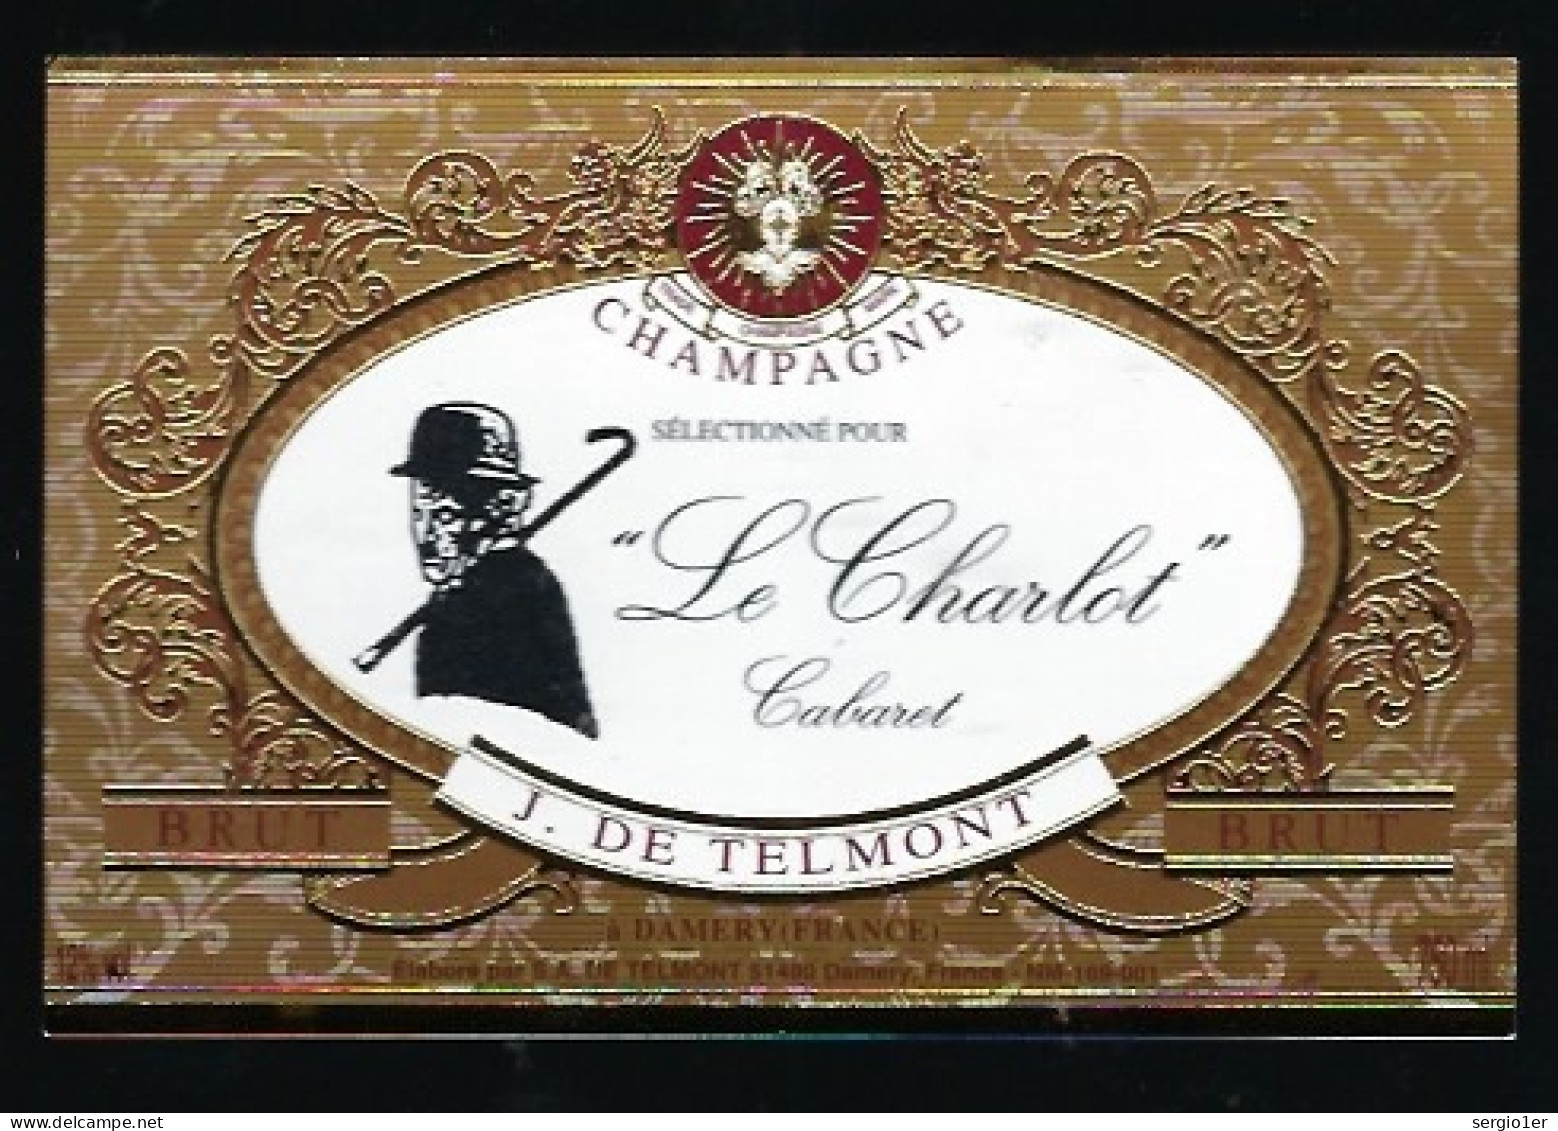 Etiquette Champagne  Brut Le Charlot  J De Telmont  Damery Marne 51 - Champagne